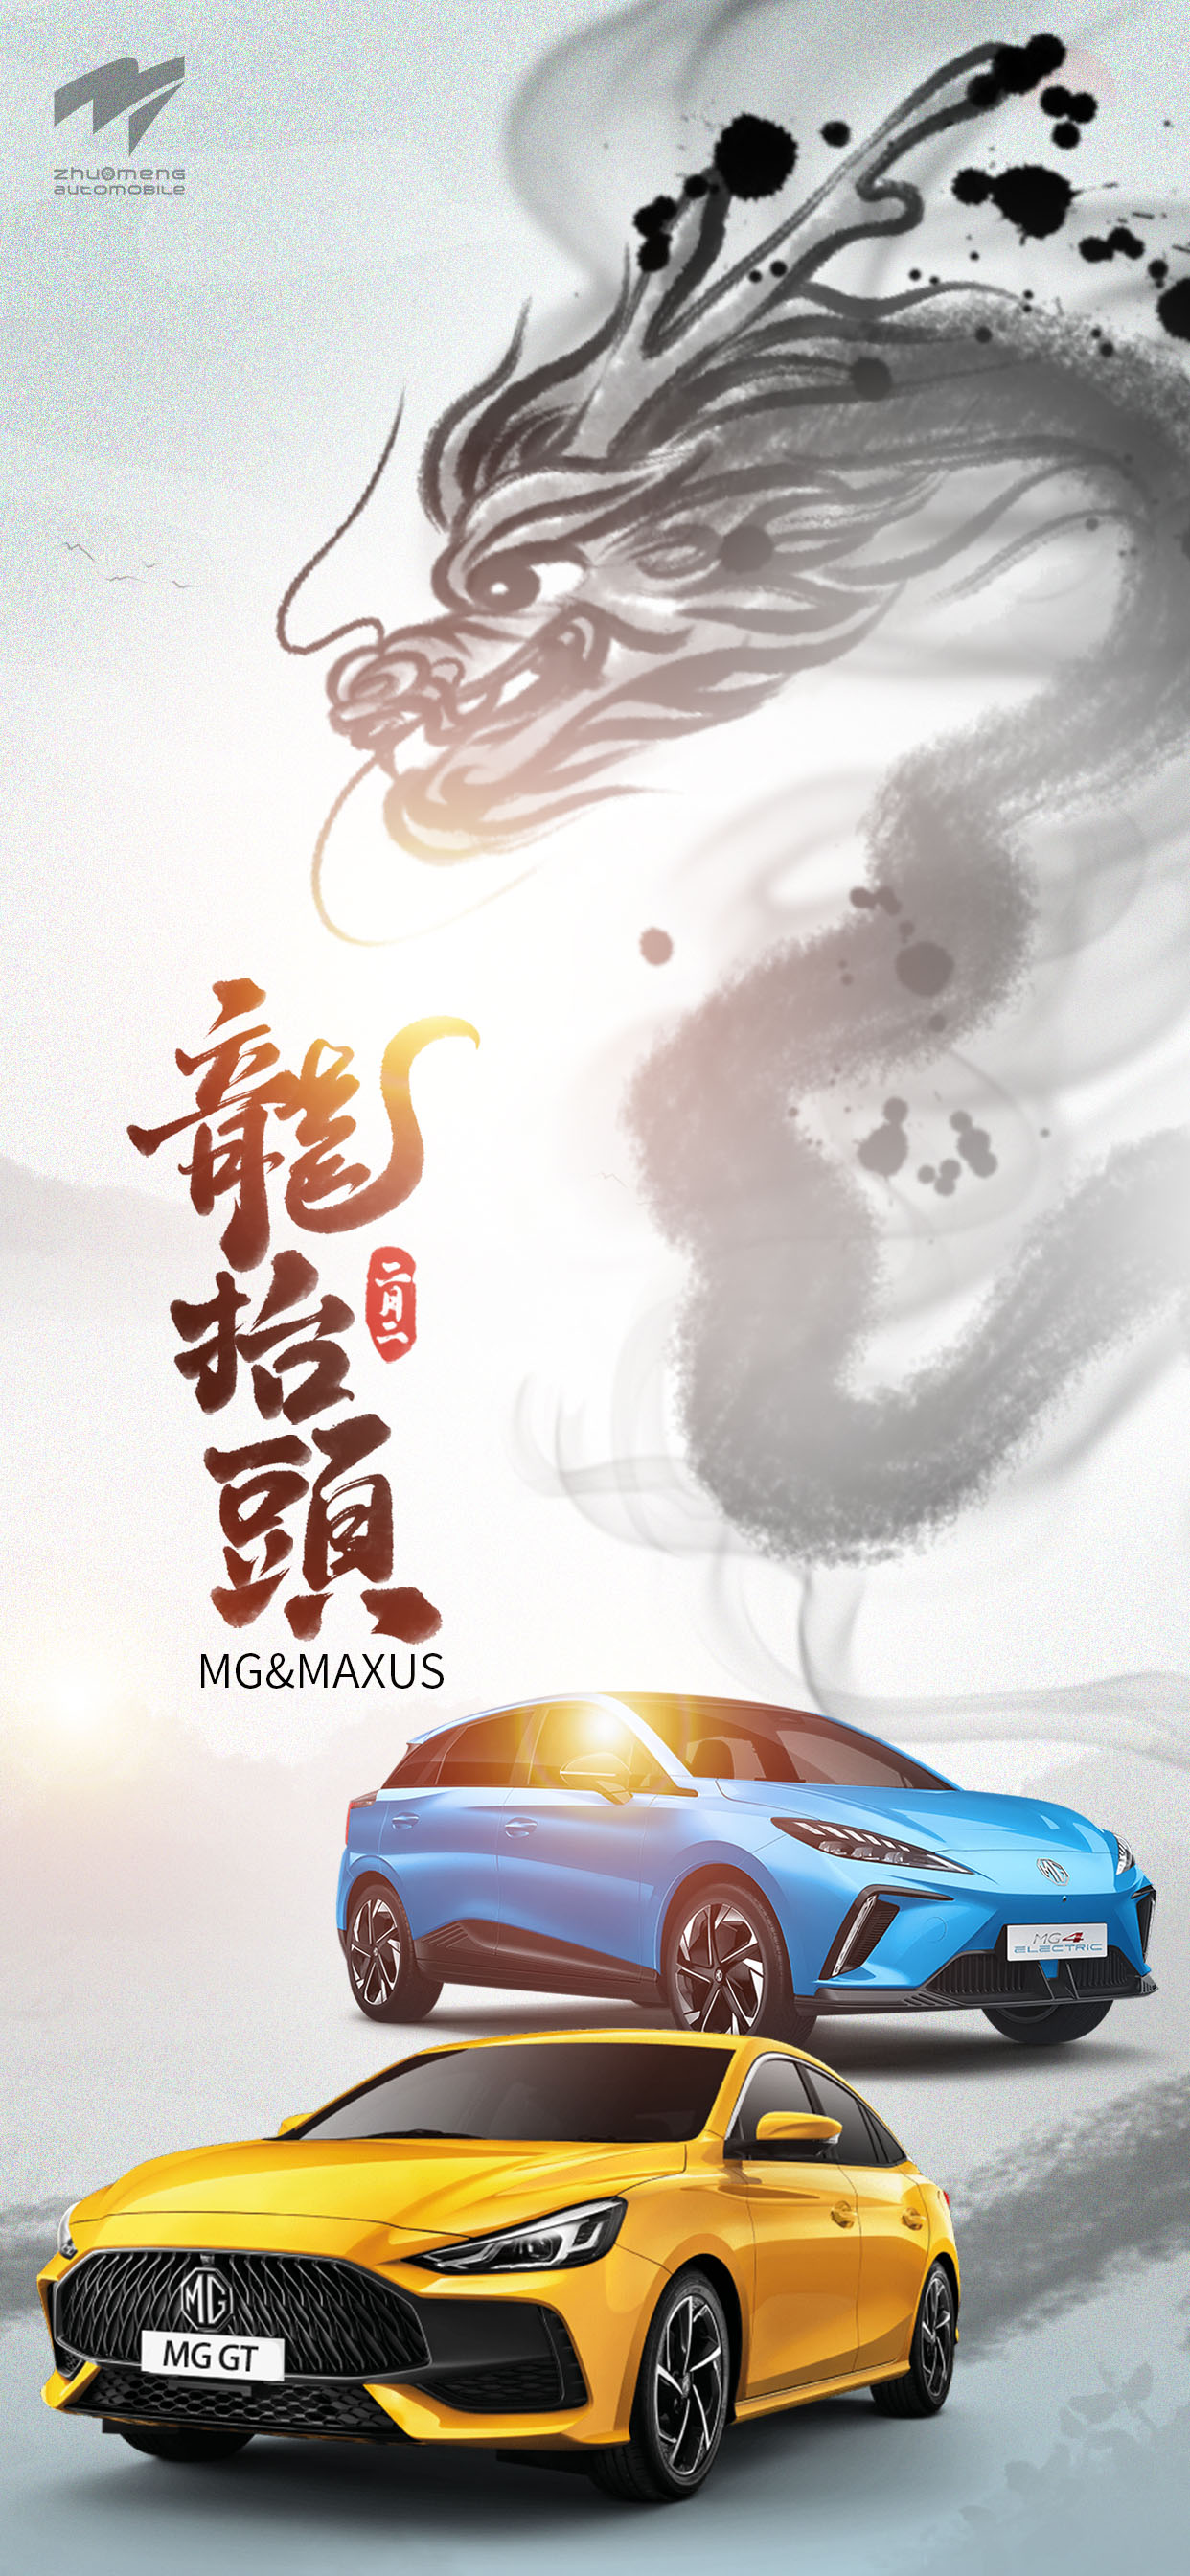 Zhuo Meng （Shanghai） Automobile Co., Ltd. Dragon Head (February 2 of the lunar calendar)